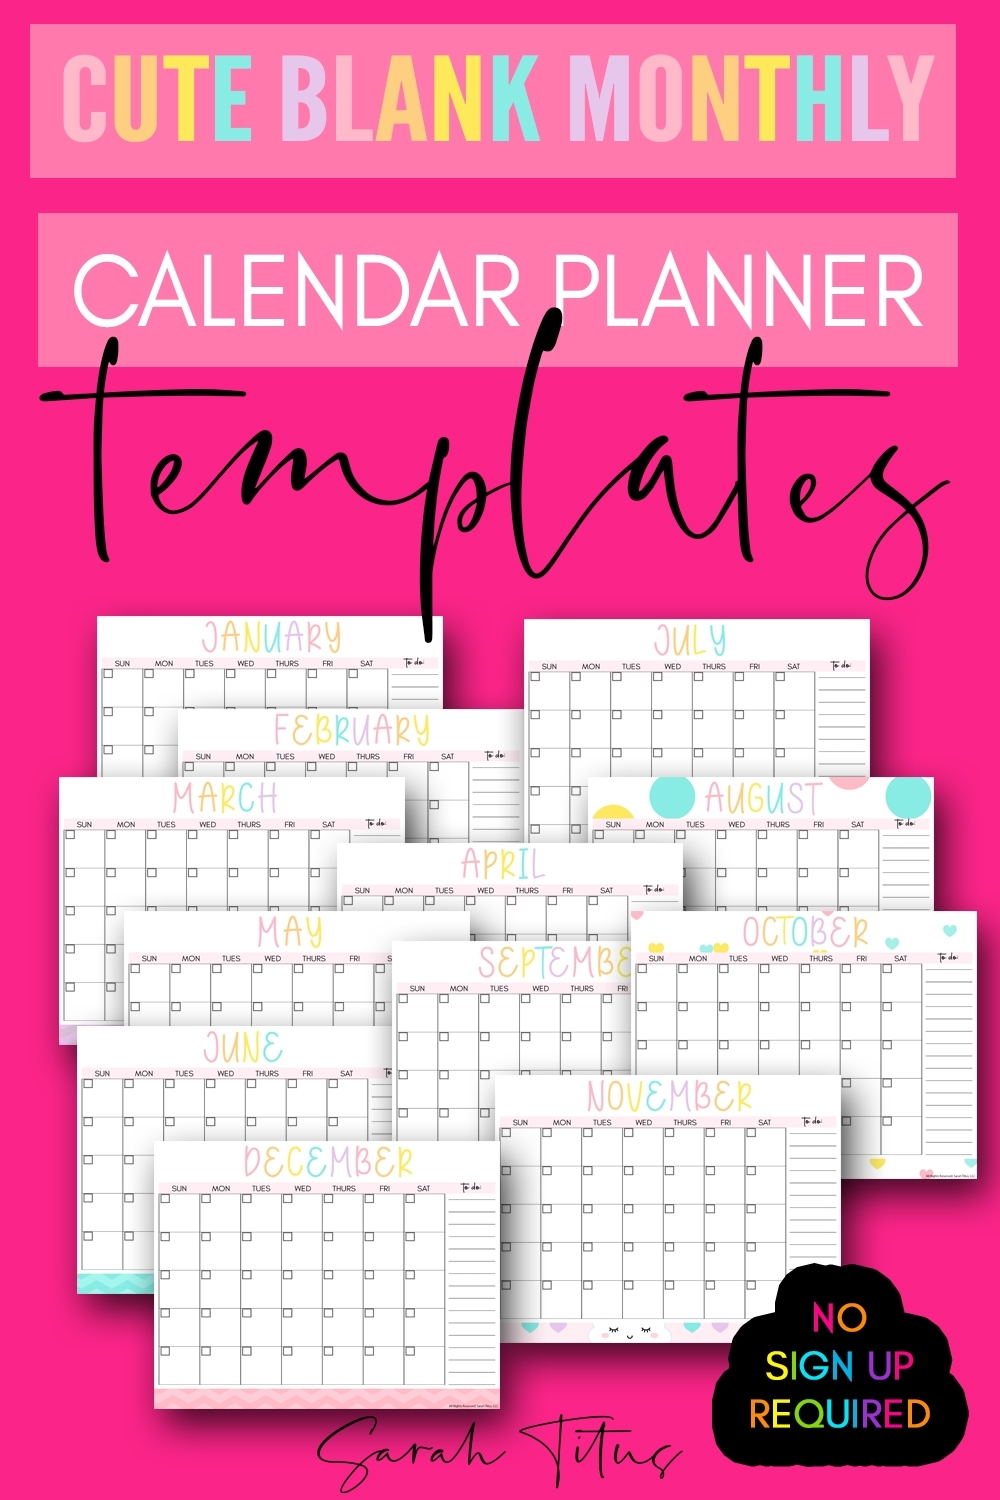 Catch Blank Monthly Calendar Template